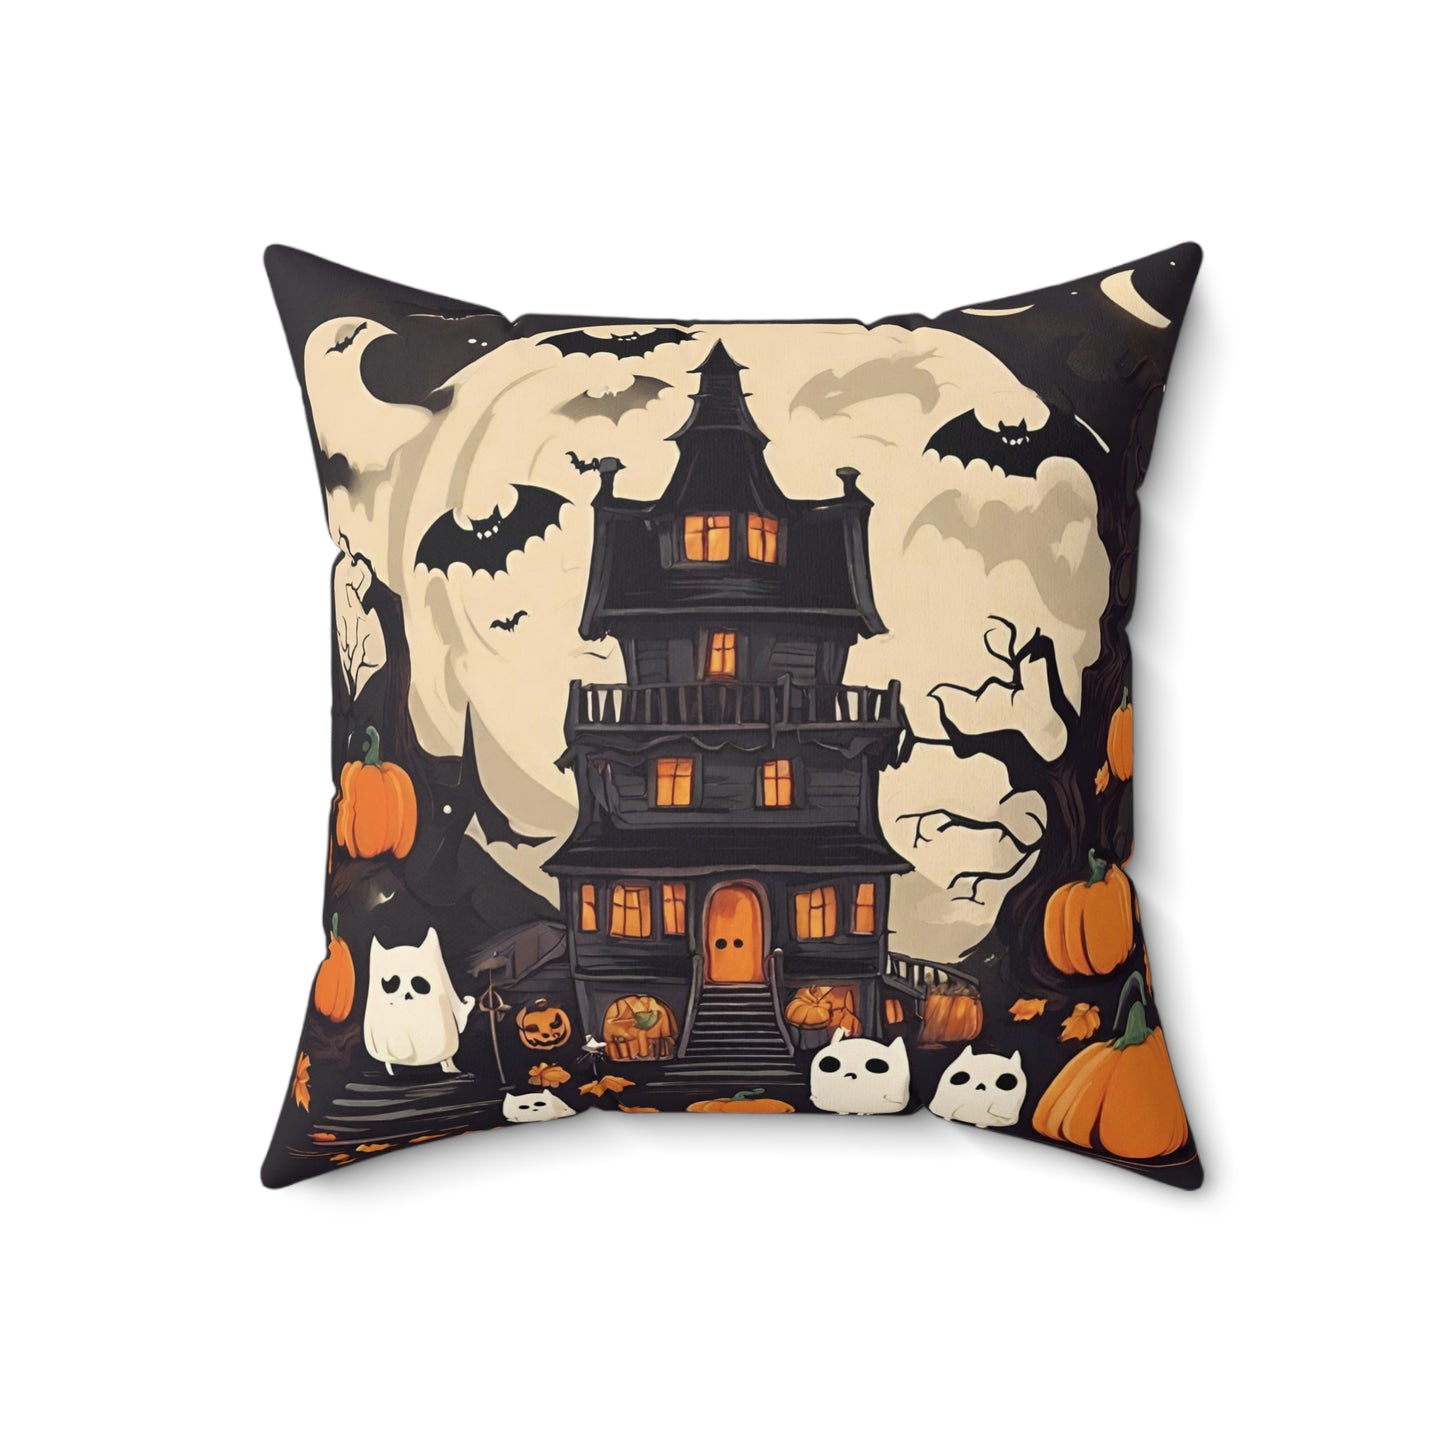 18" × 18" Home Decor Halloween Throw Pillows Decor Indoor Interior Design Idea for Home Styling Petrova Designs